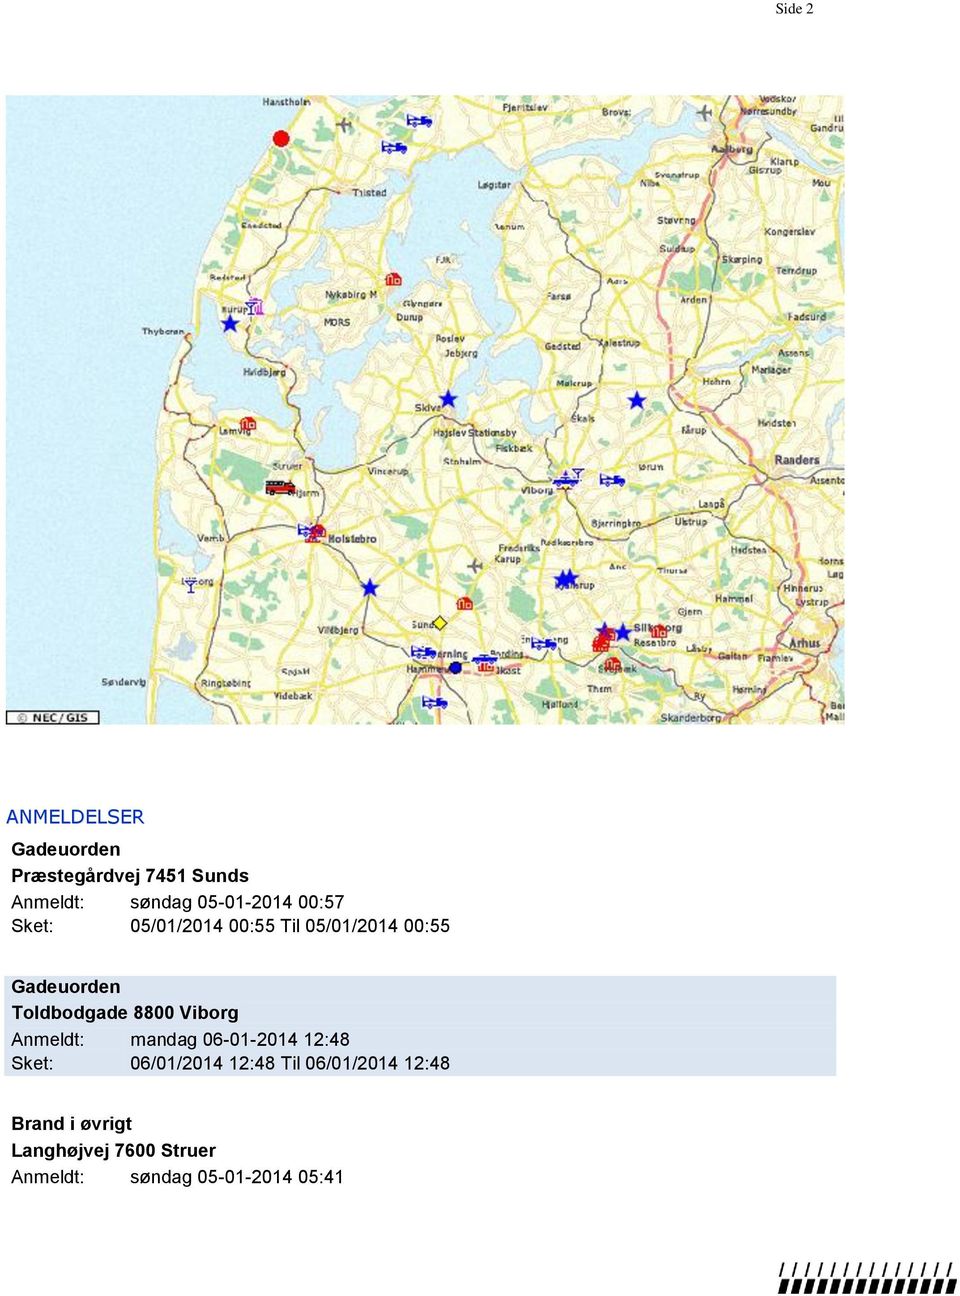 Toldbodgade 8800 Viborg Anmeldt: mandag 06-01-2014 12:48 Sket: 06/01/2014